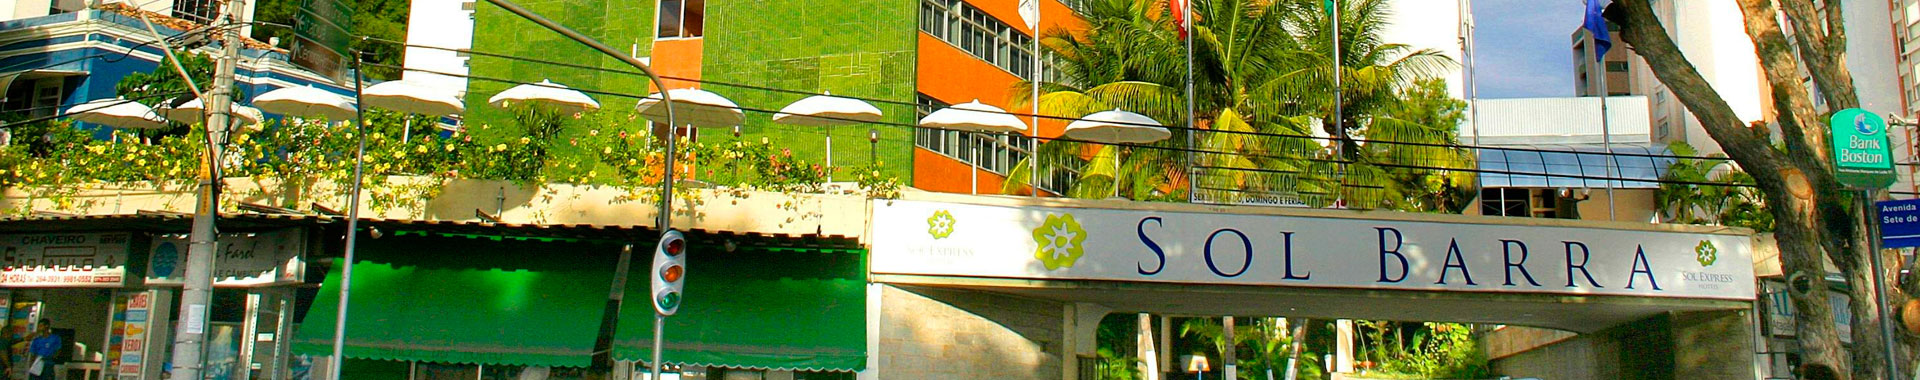 Brasil - Salvador Bahia - Hoteles - Sol